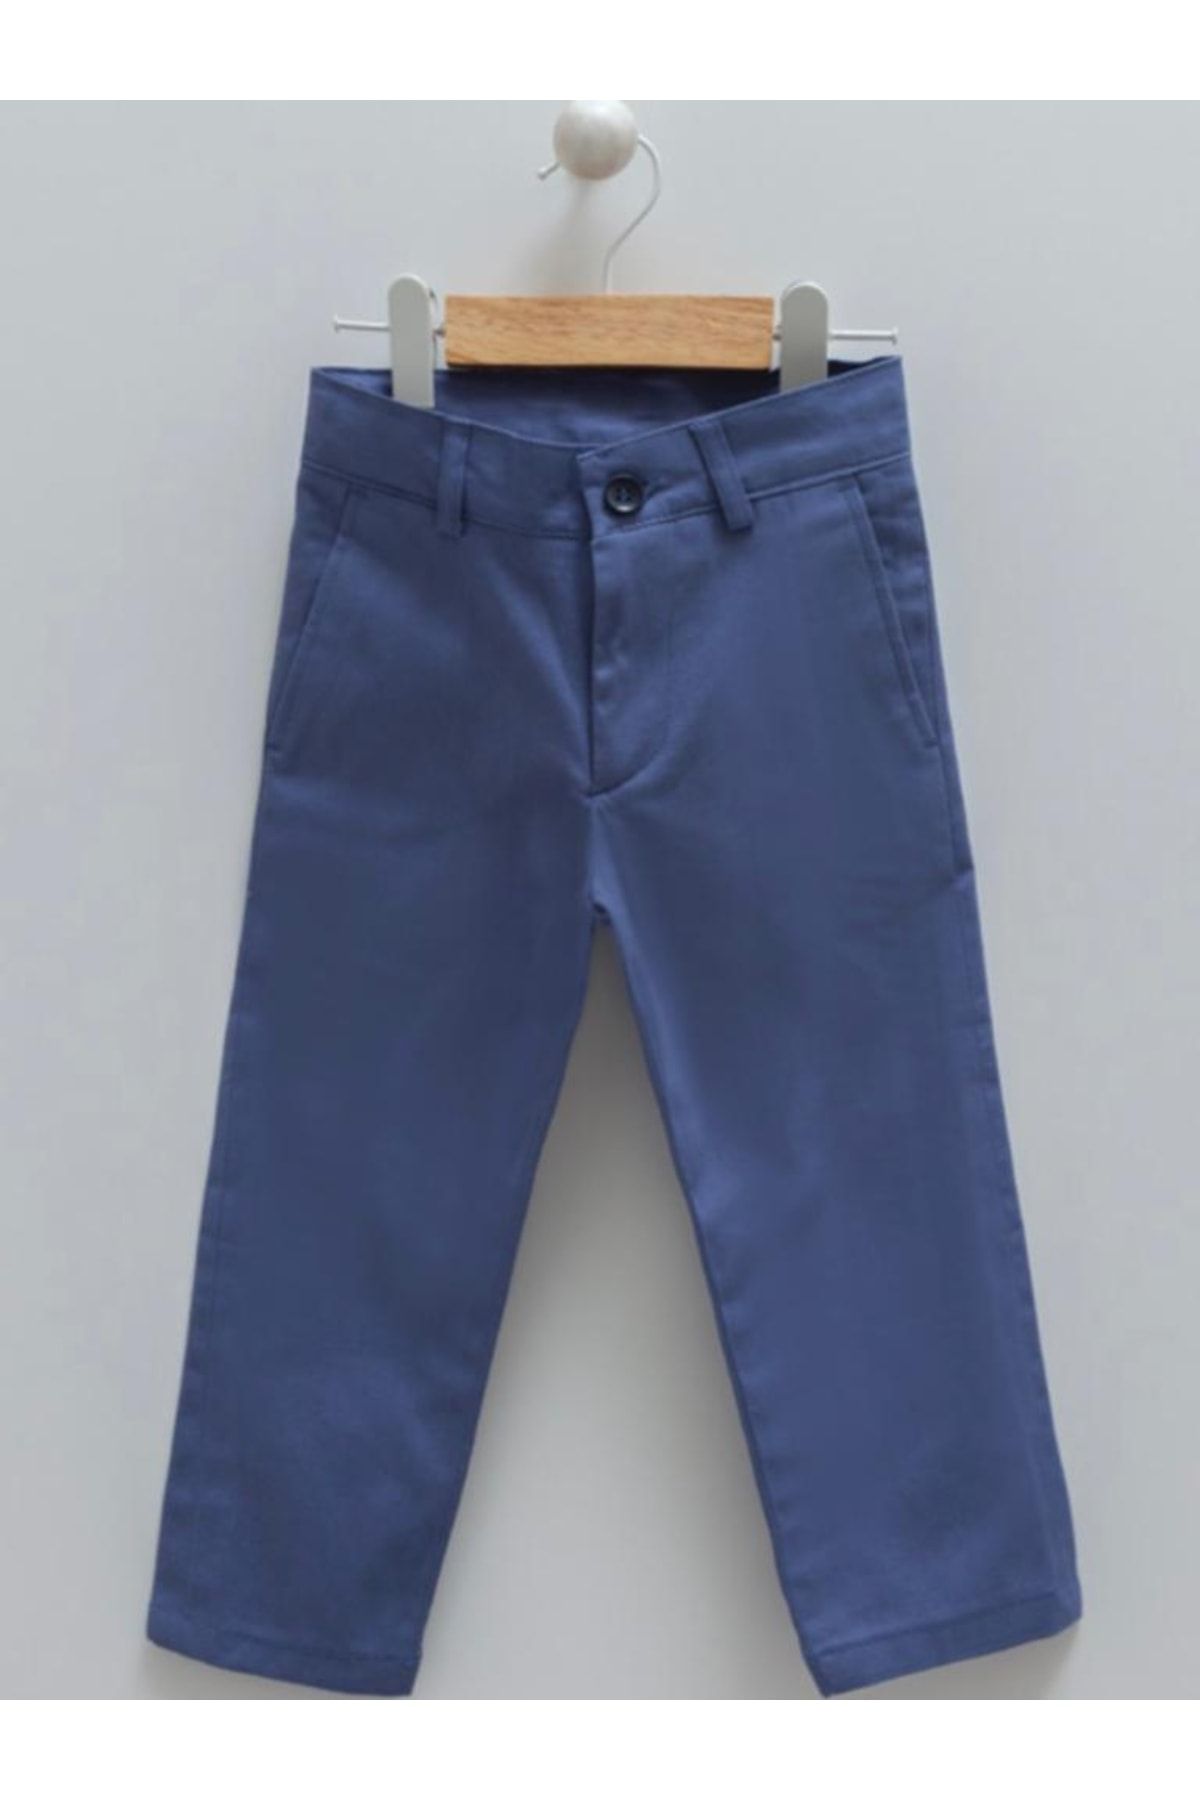 Caramell Mavi Keten Erkek Çocuk Pantolon